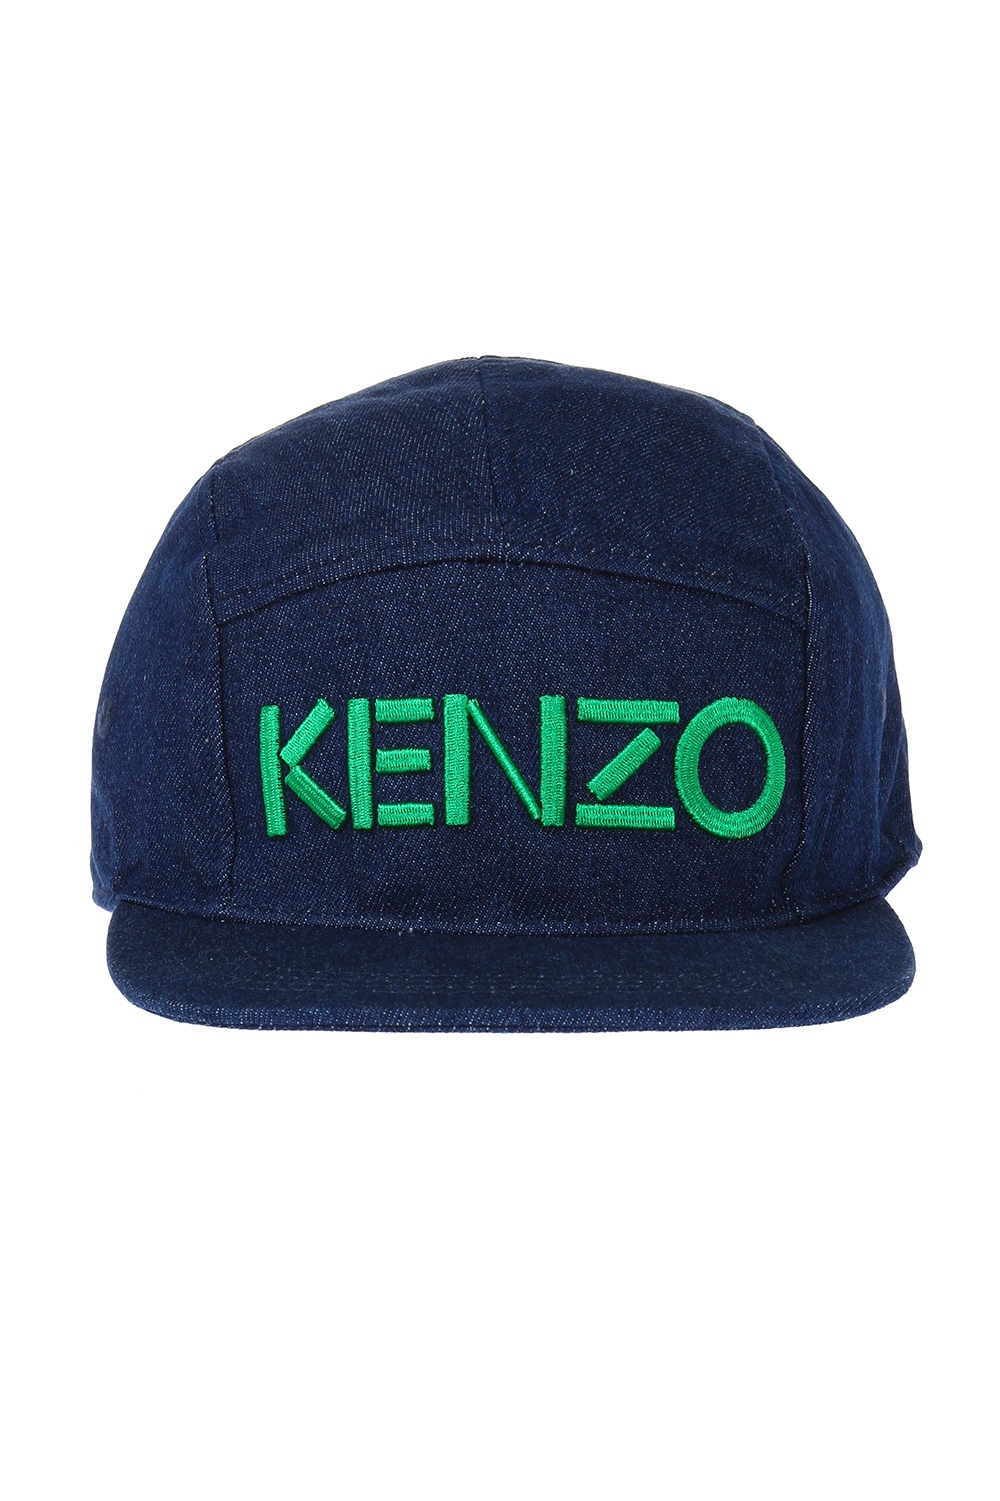 kenzo kids cap